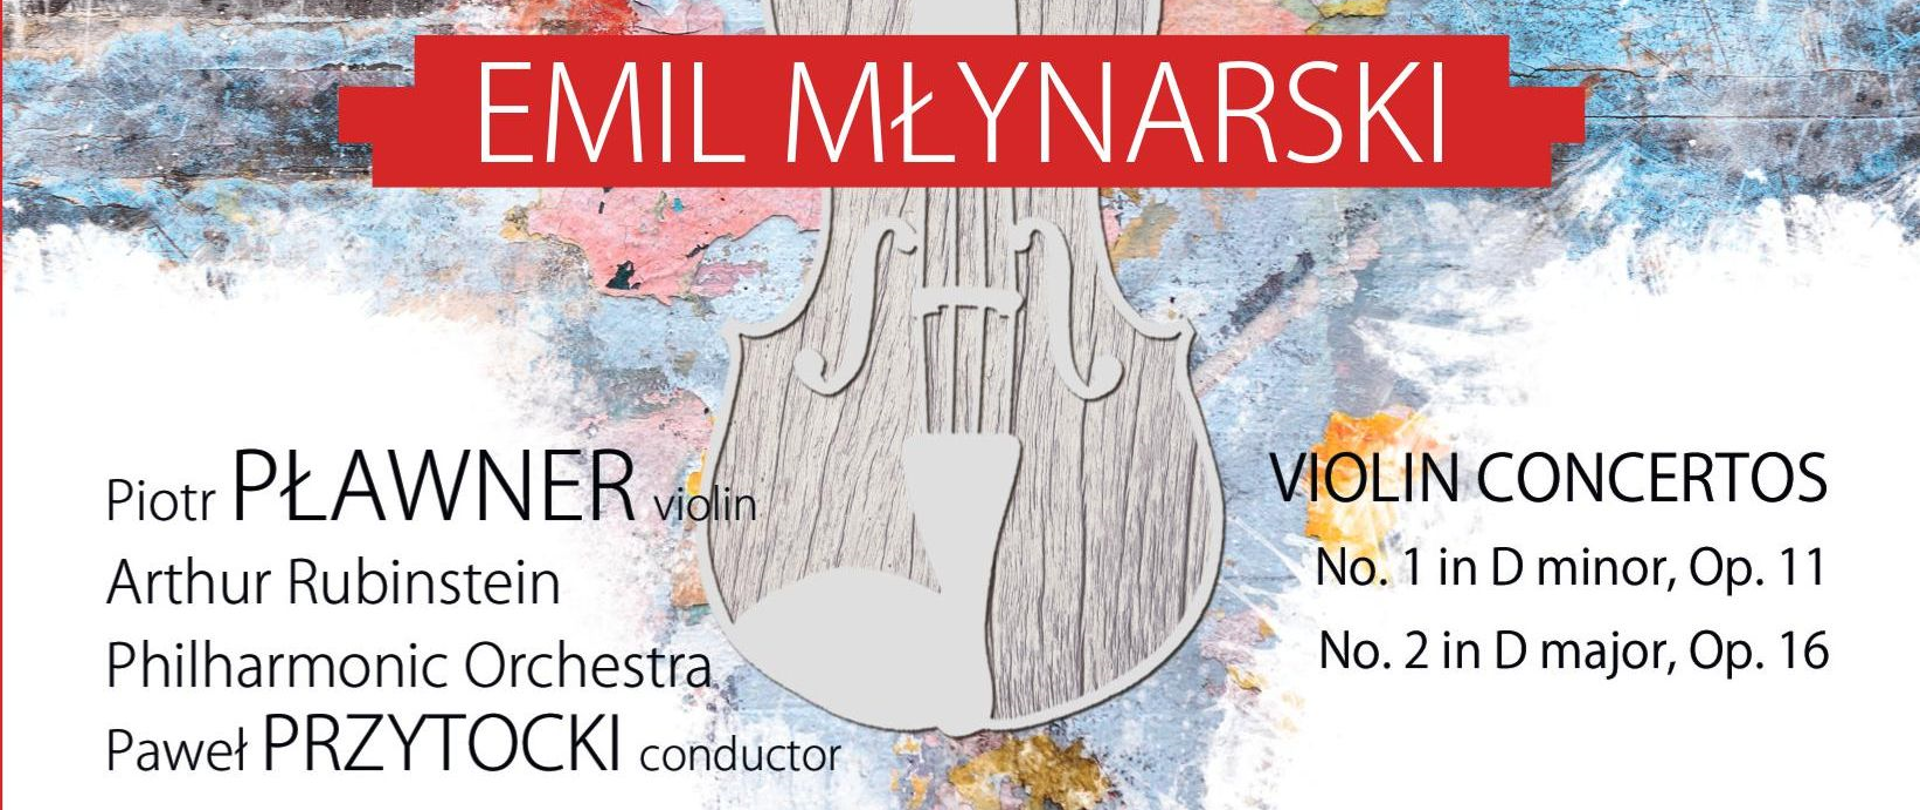 Emil Młynarski: Violin Concertos